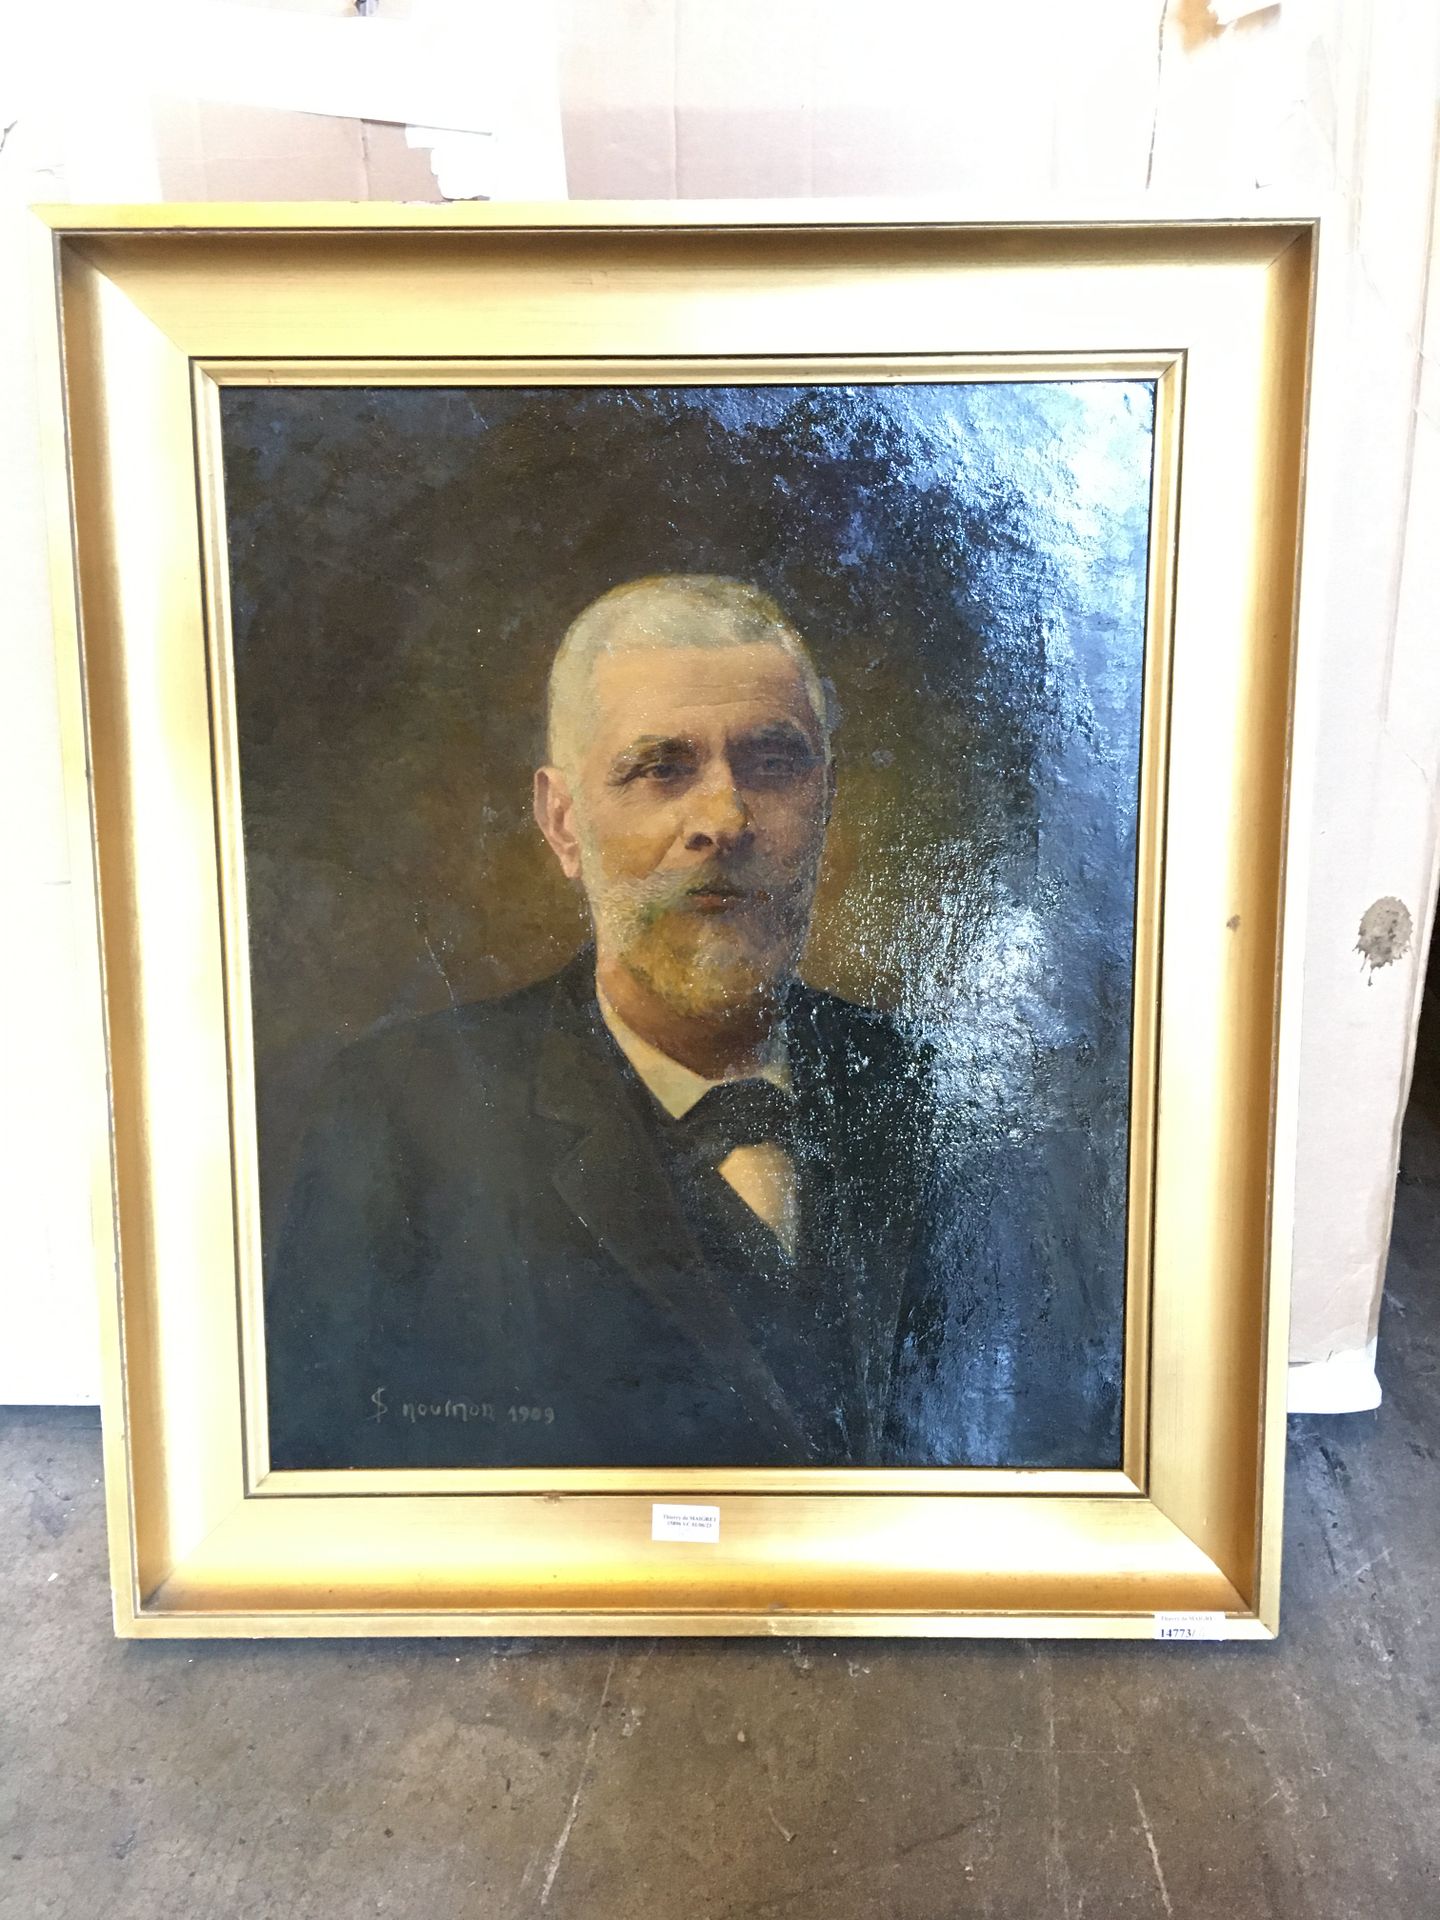 Null S.诺尔农一个男人的肖像。布面油画，左下角有签名，日期为1909年，61 x 50 cm (参考4)